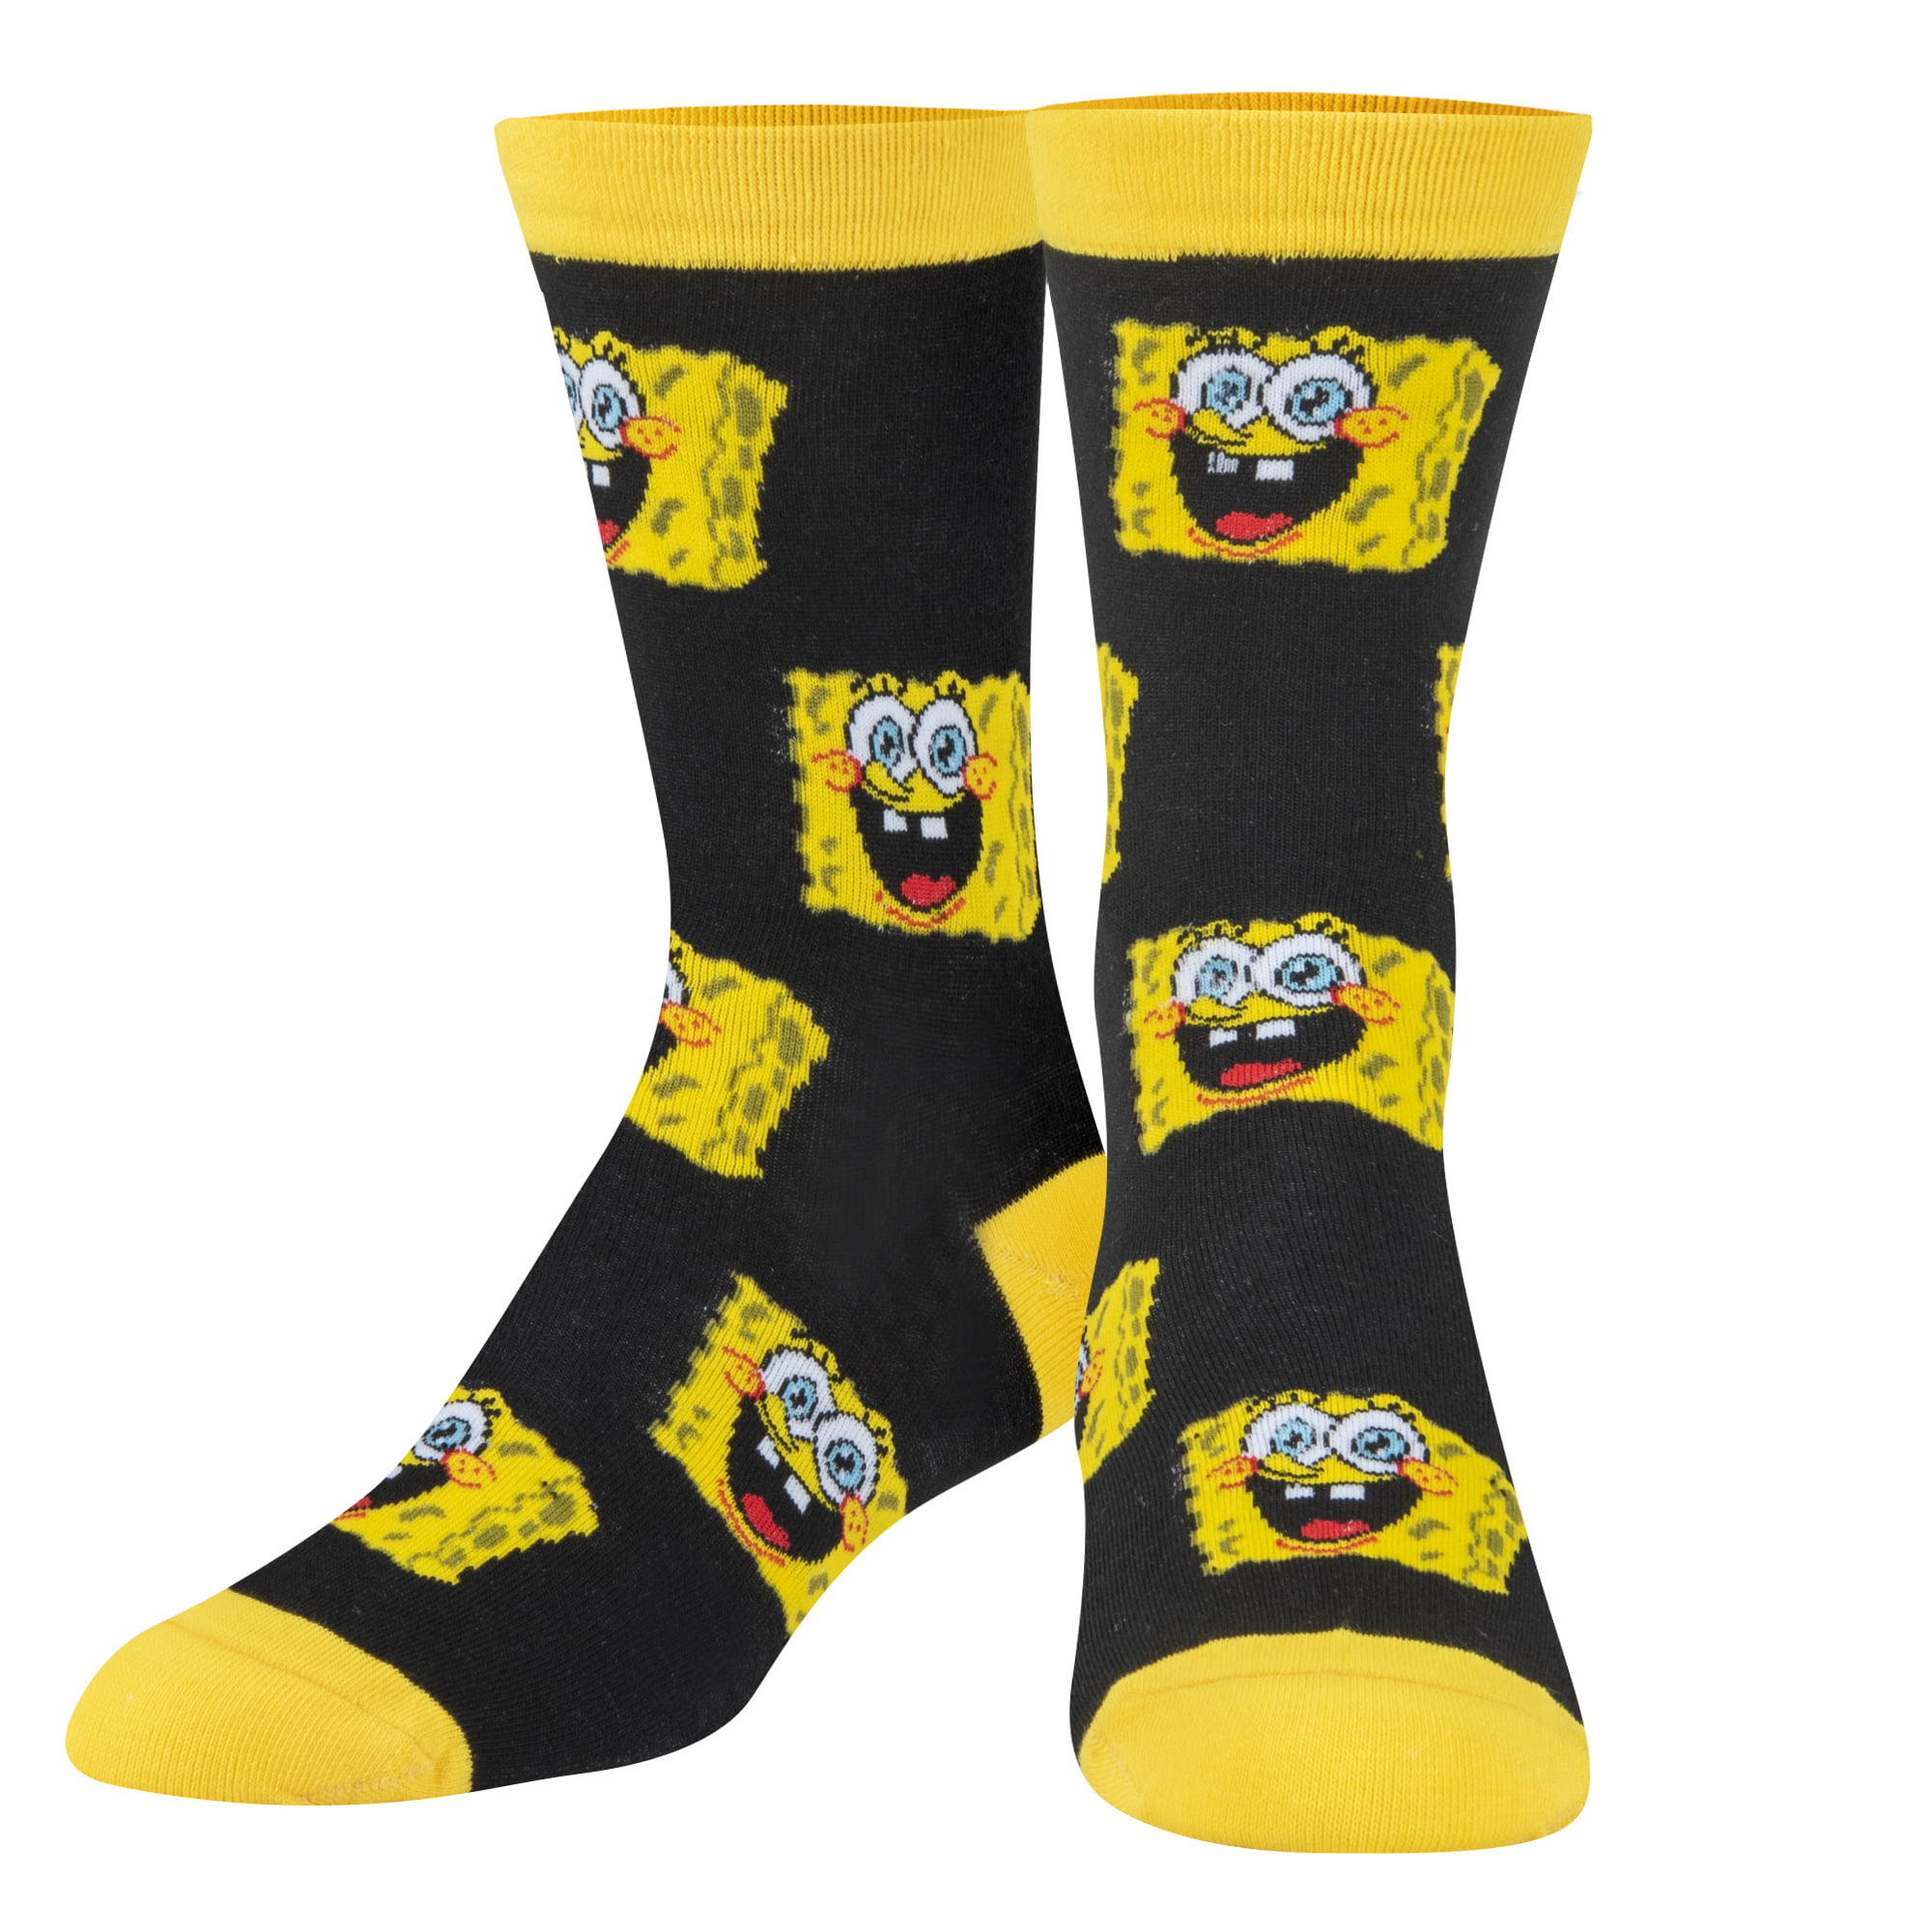 Crazy Socks Womens Cartoons Spongebob Heads Crew Socks Novelty